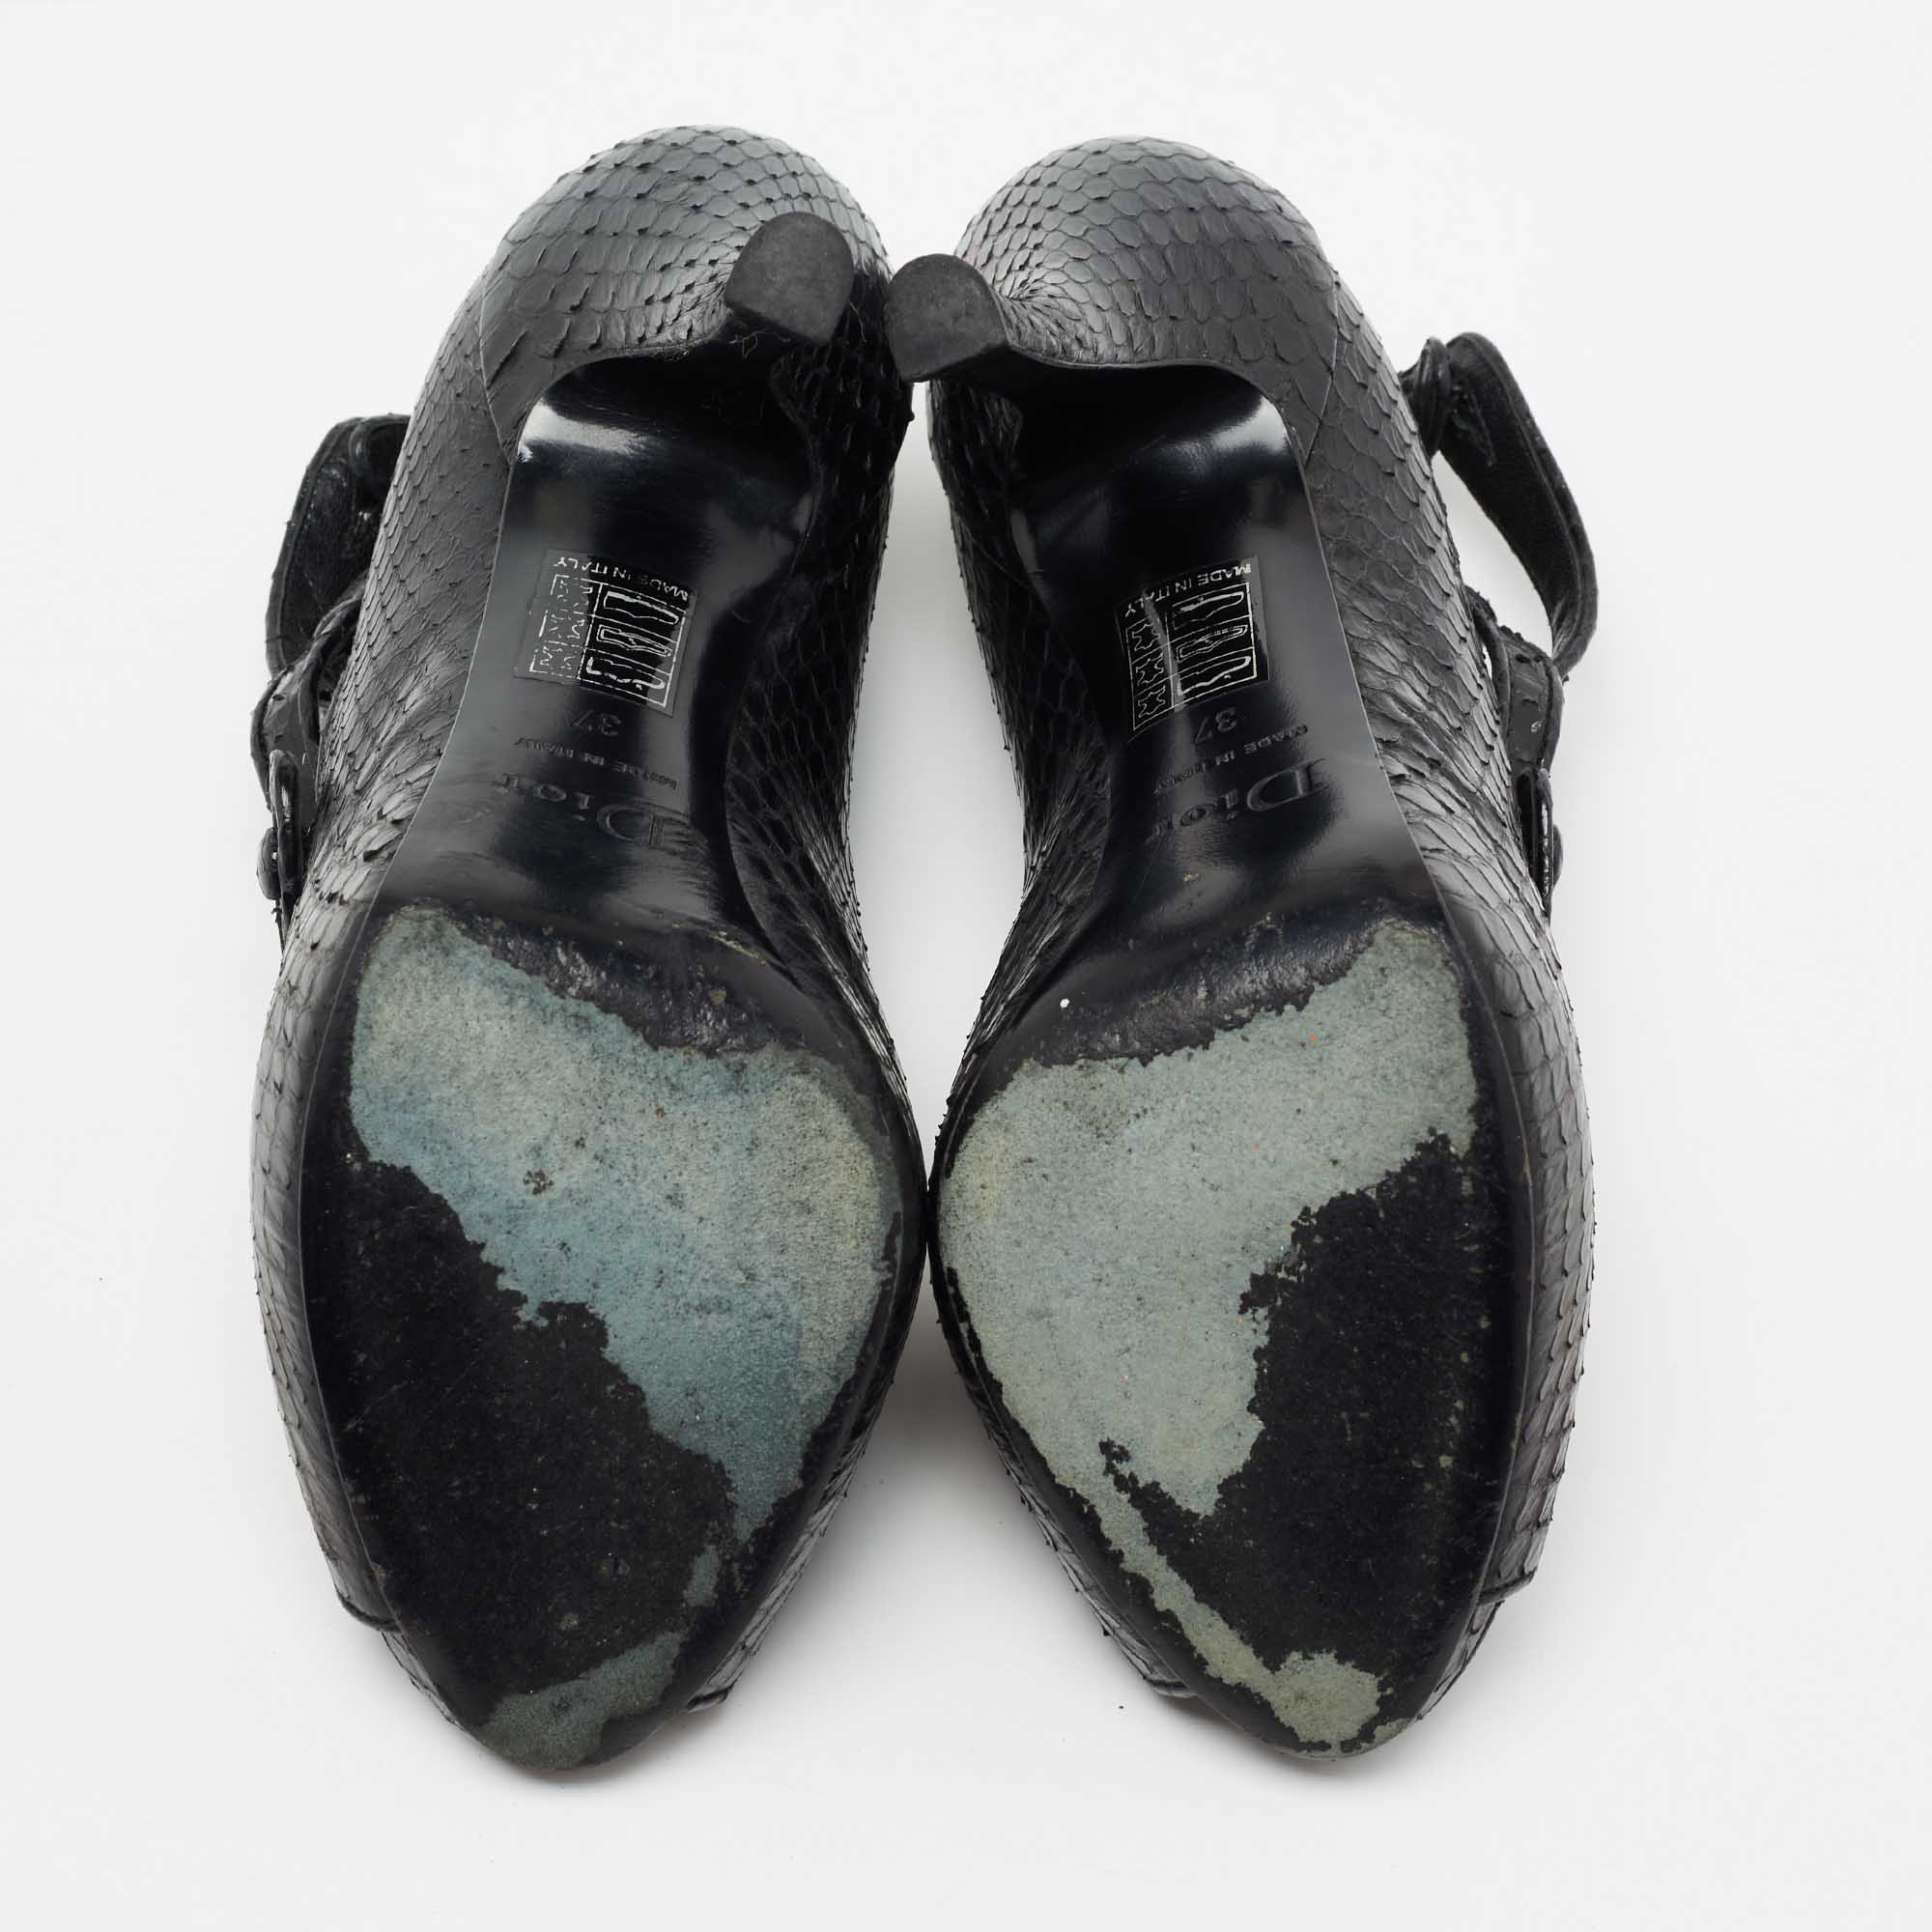 Dior Back Python Leather Strappy Peep Toe Platform Sandals Size 37